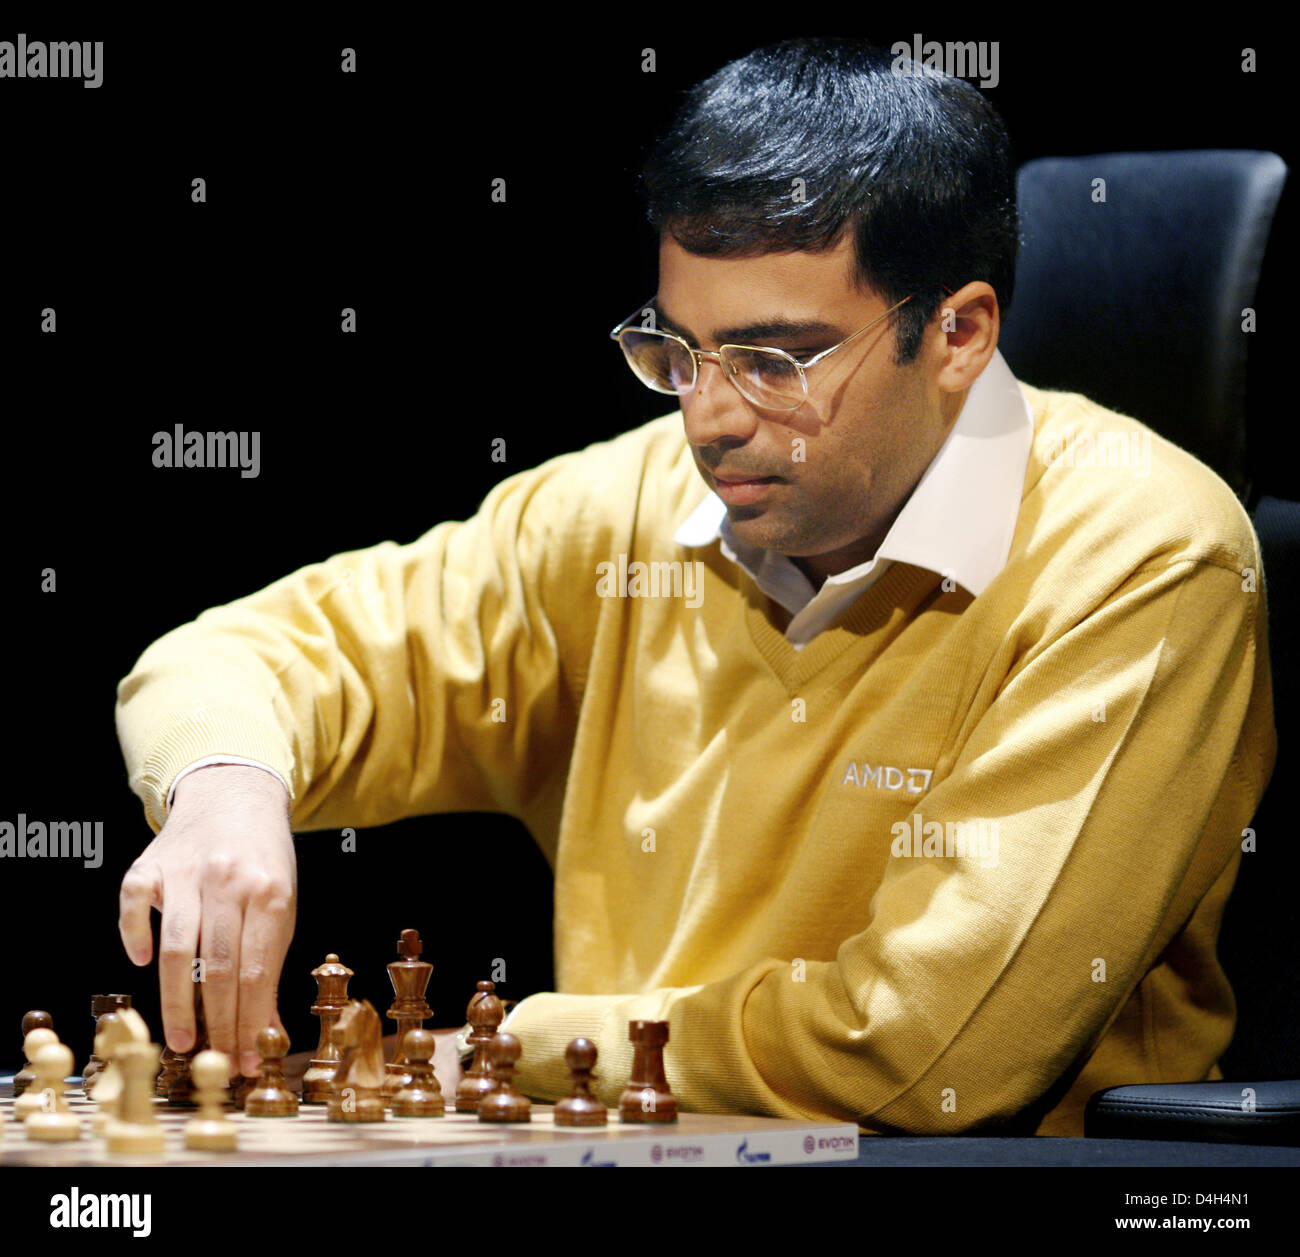 All World Chess Champions 1886-2021. Viswanathan Anand, Garry